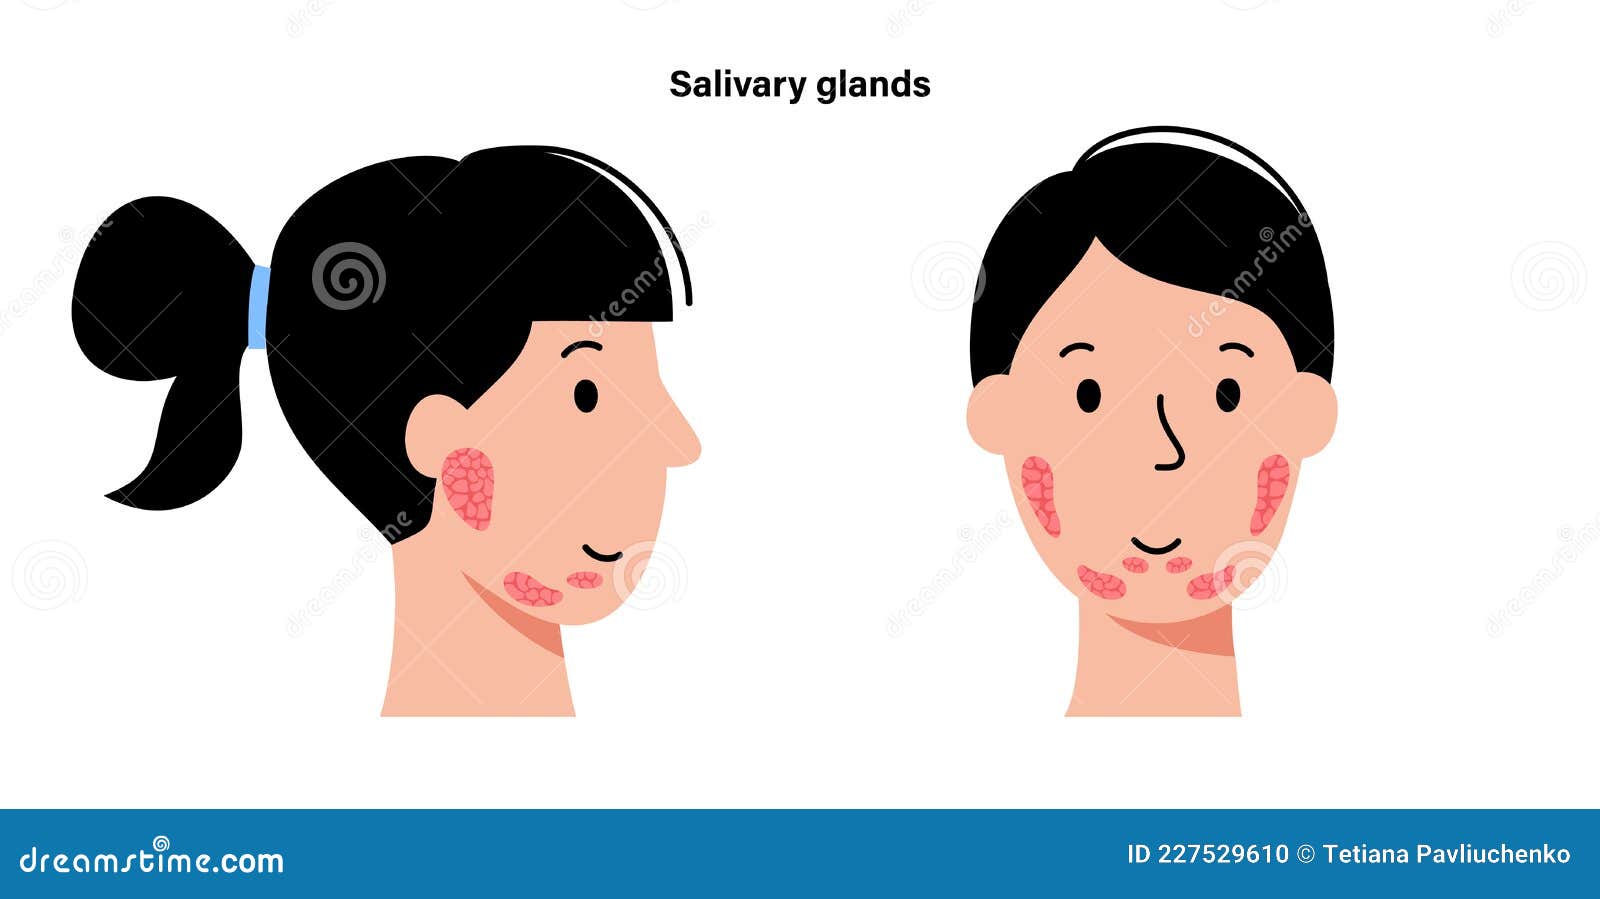 salivary gland concept